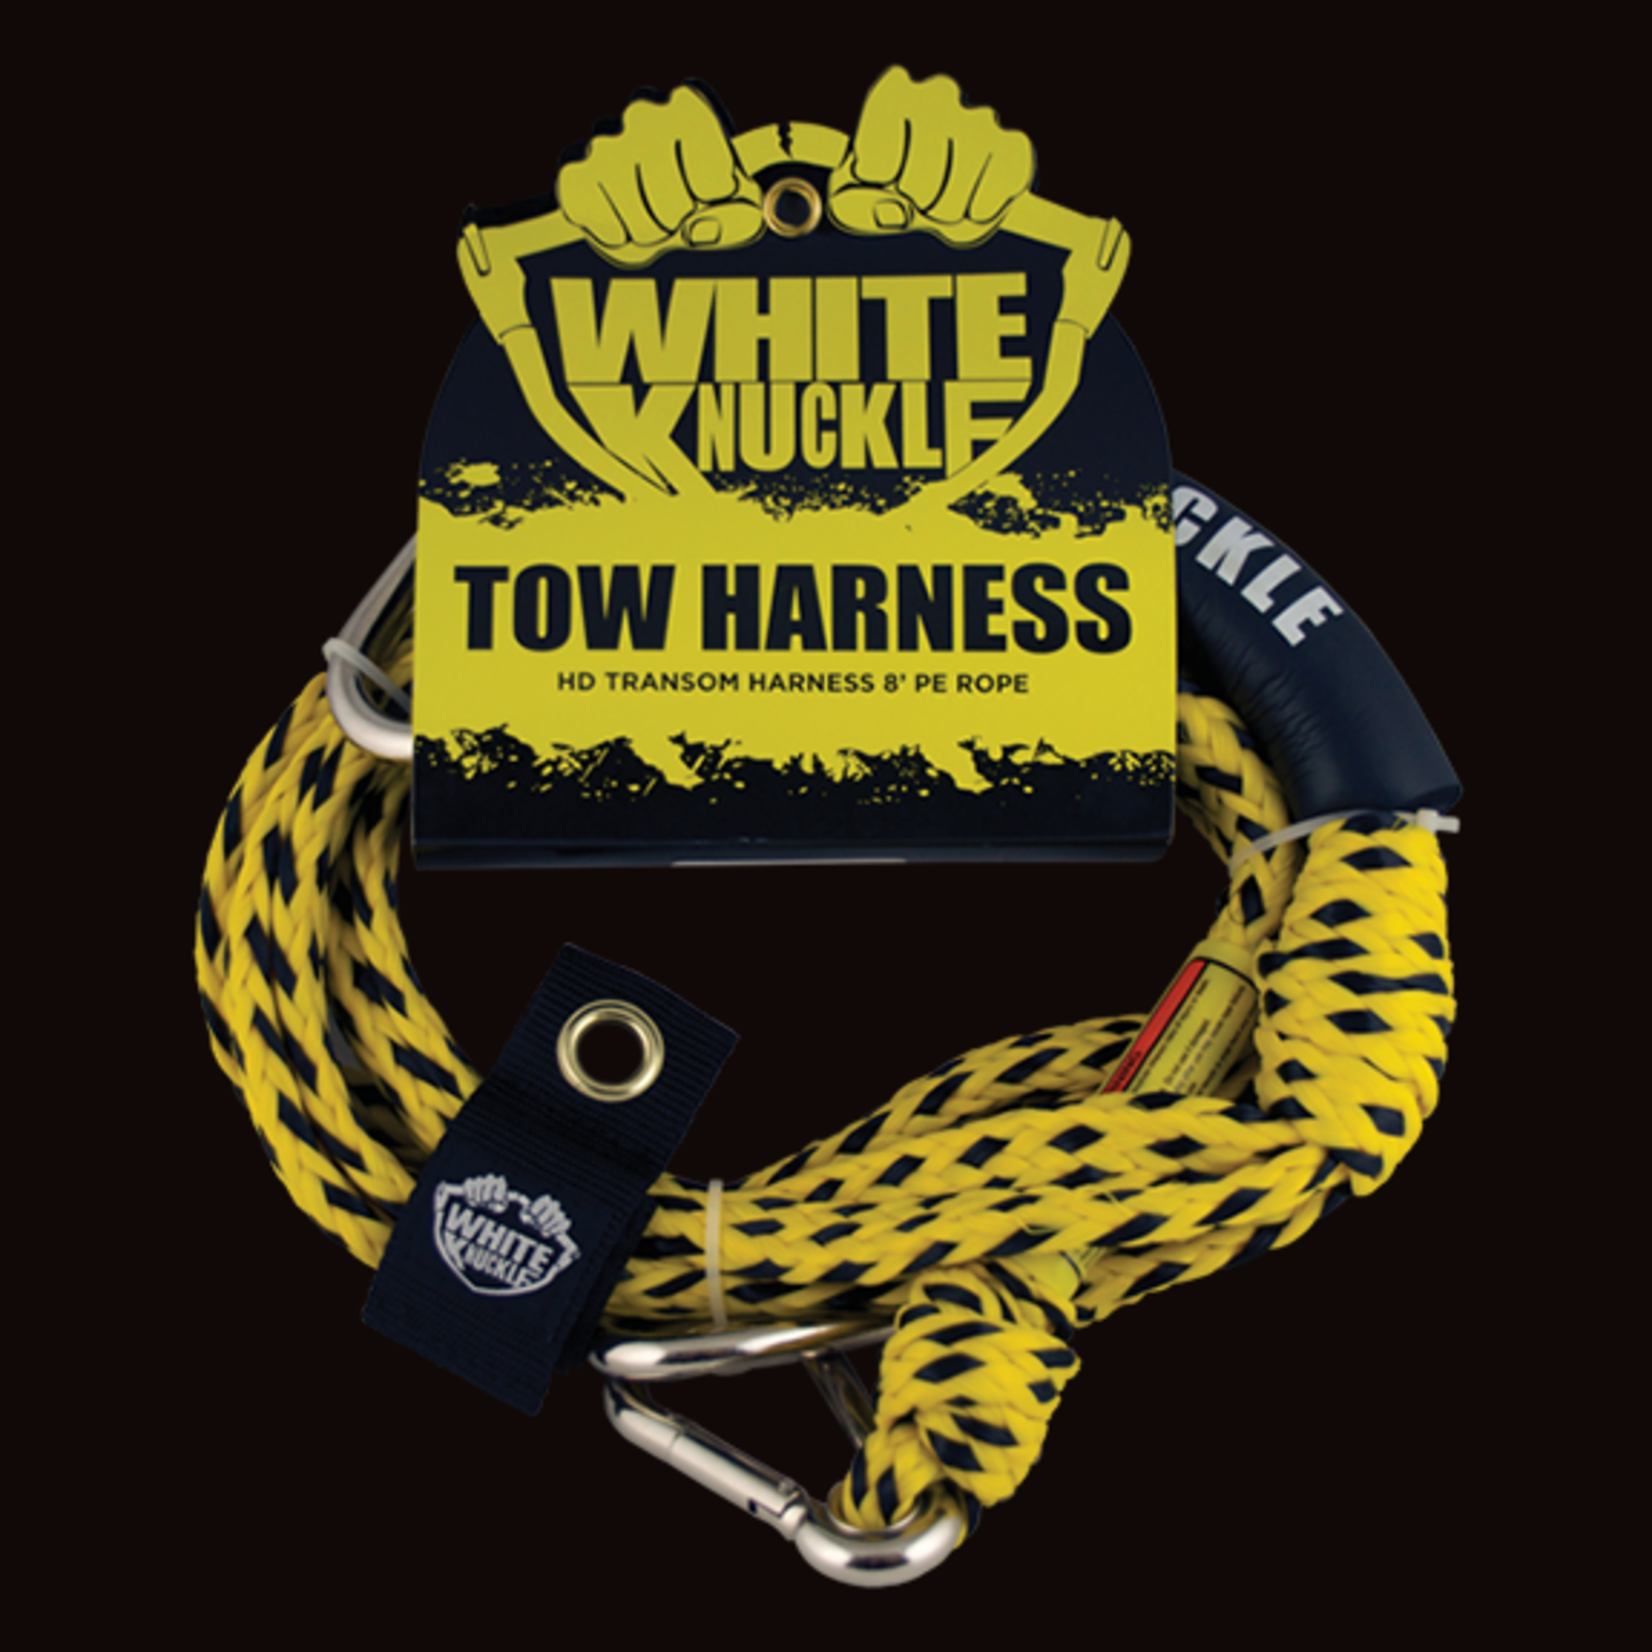 White knuckle transom harness wake/ski/tow